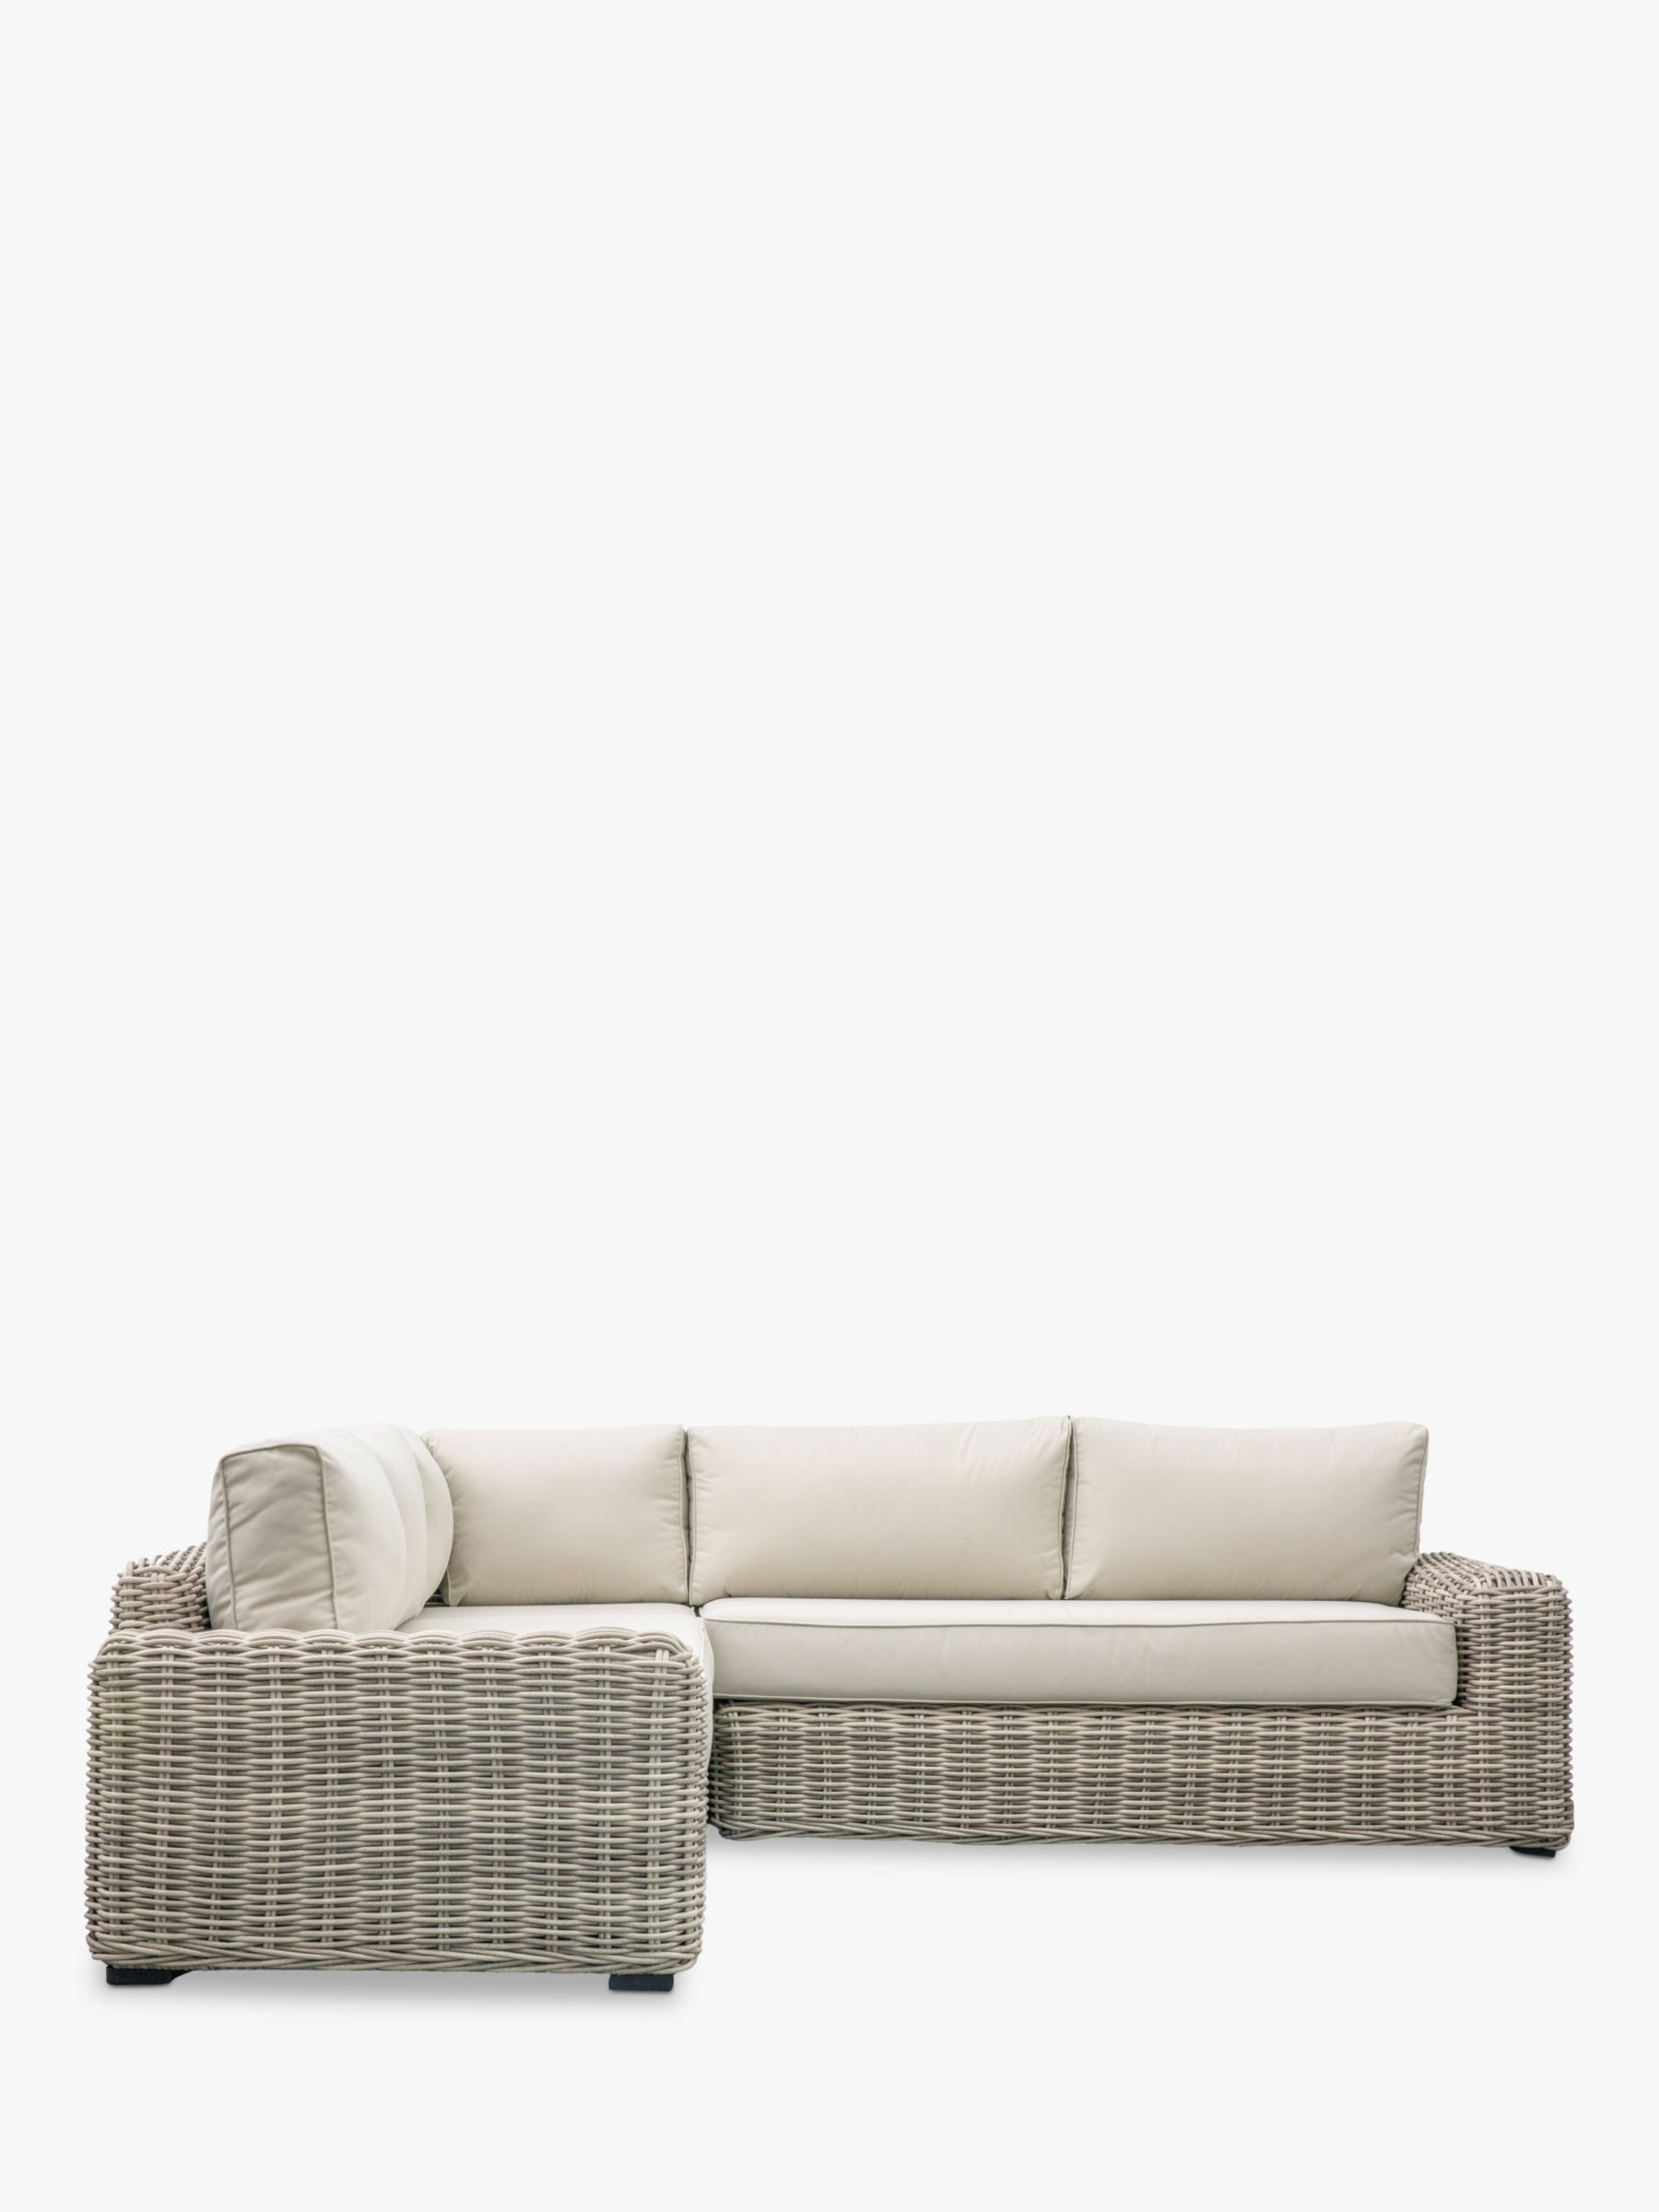 Gallery Direct Ragusa 10-Seater Corner Garden Lounge Sofa Set, Grey